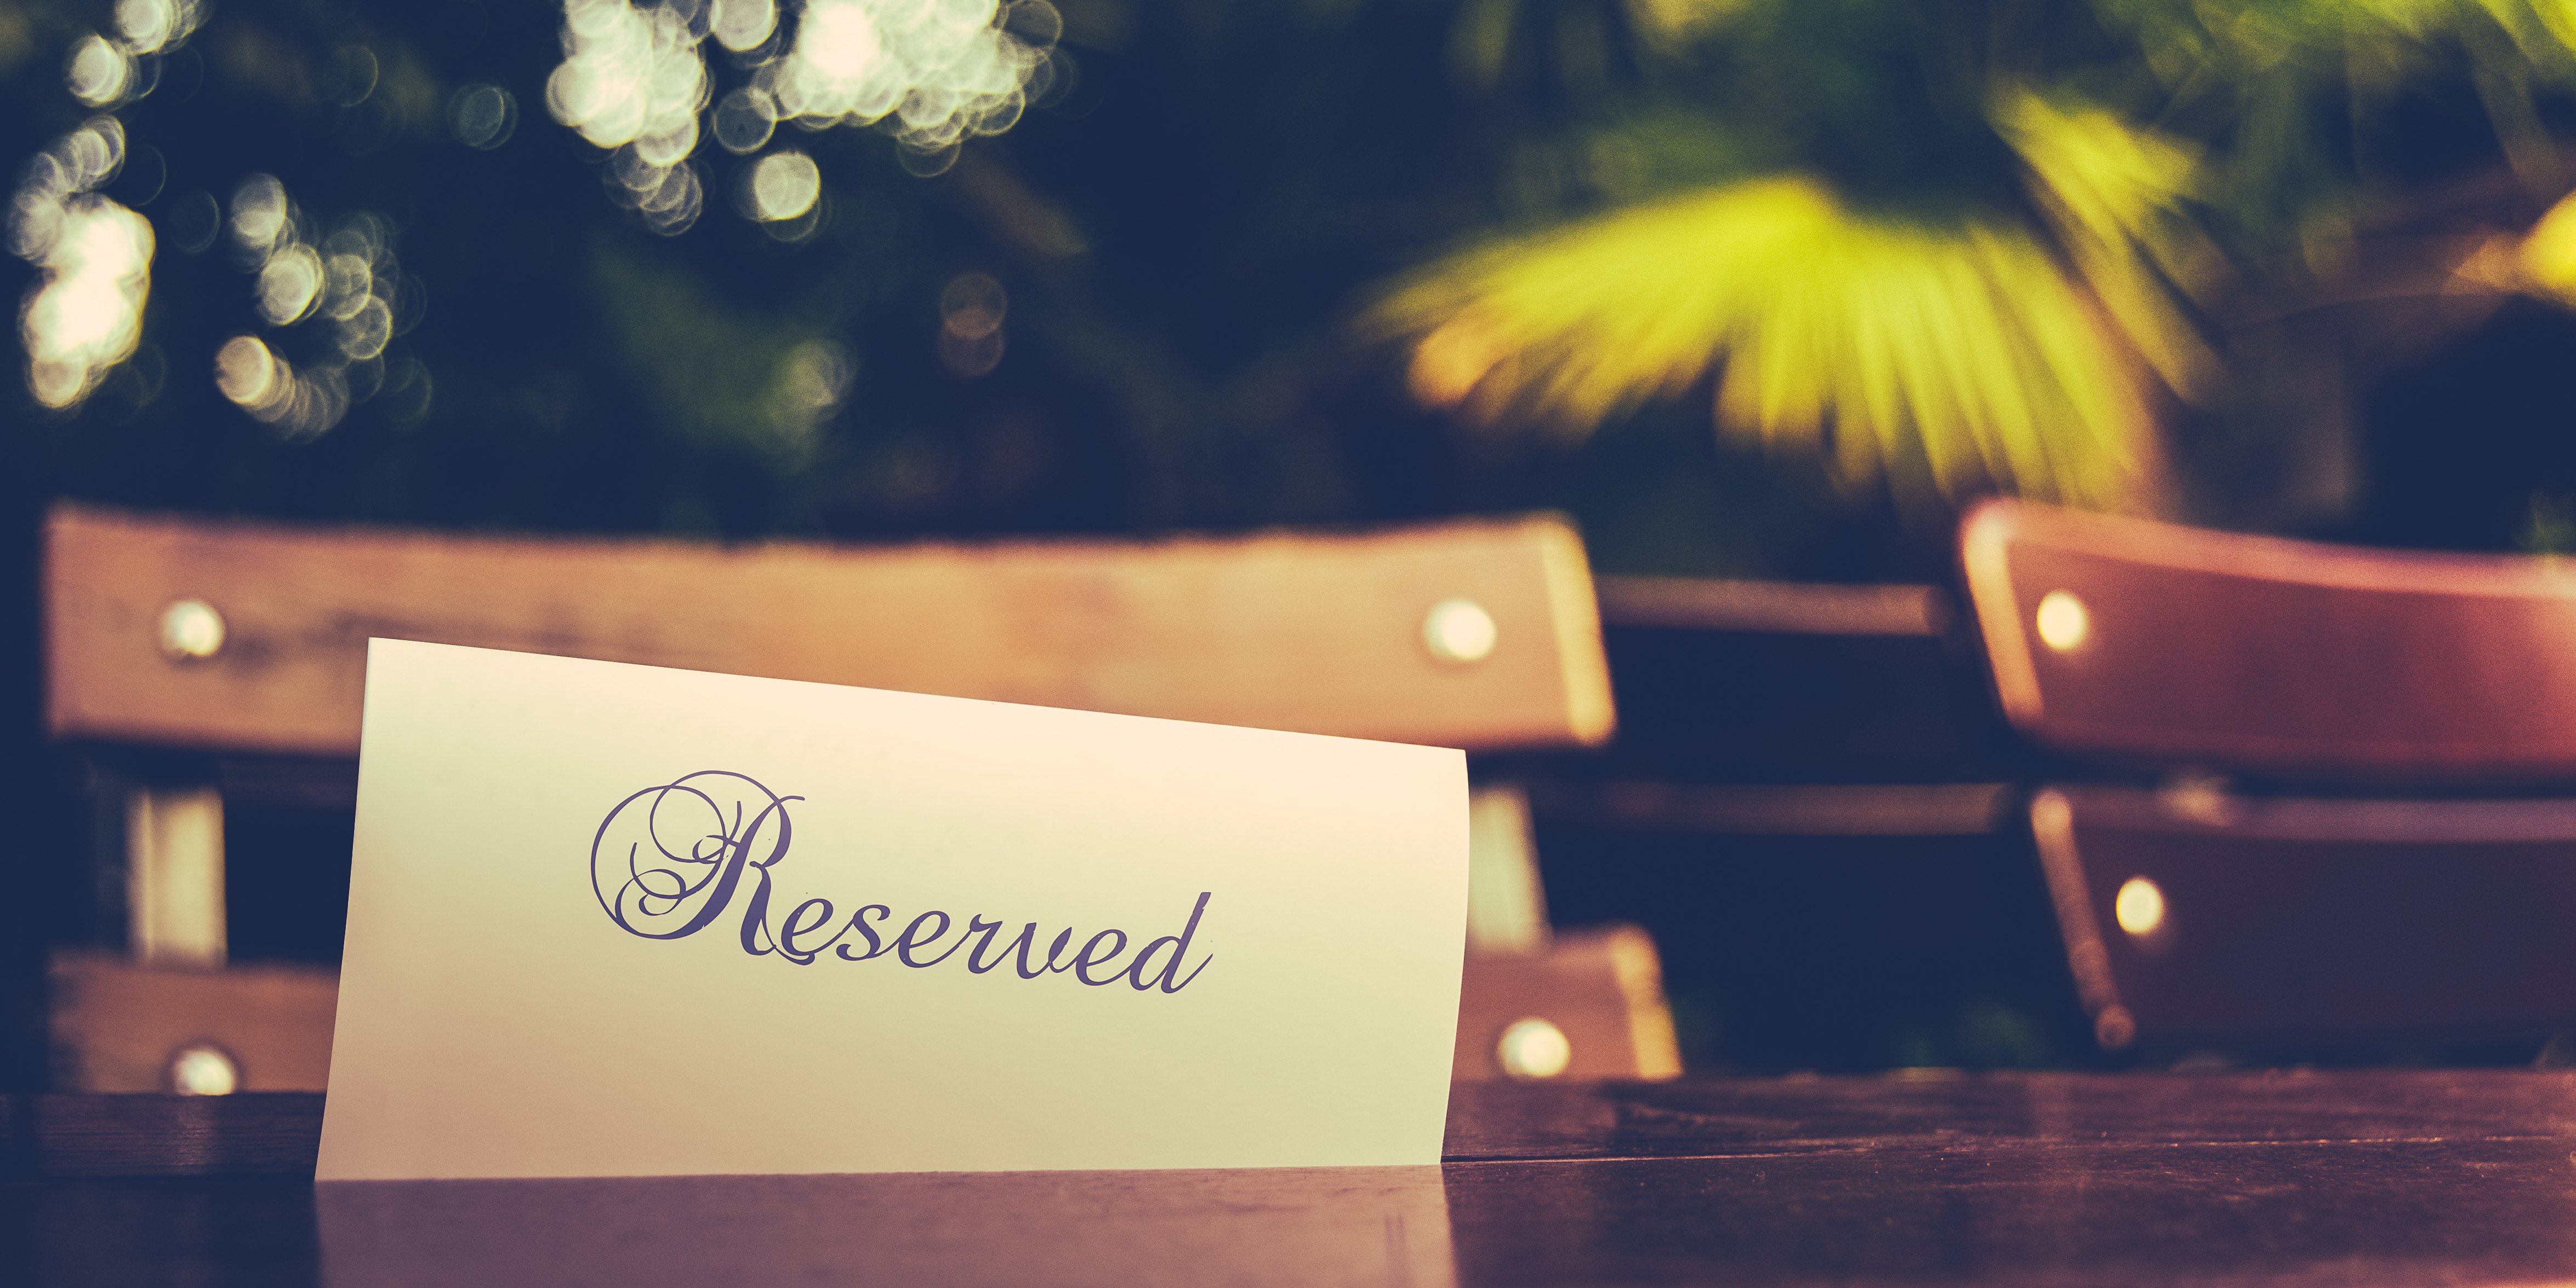 5 Tips for Making Restaurant Reservations